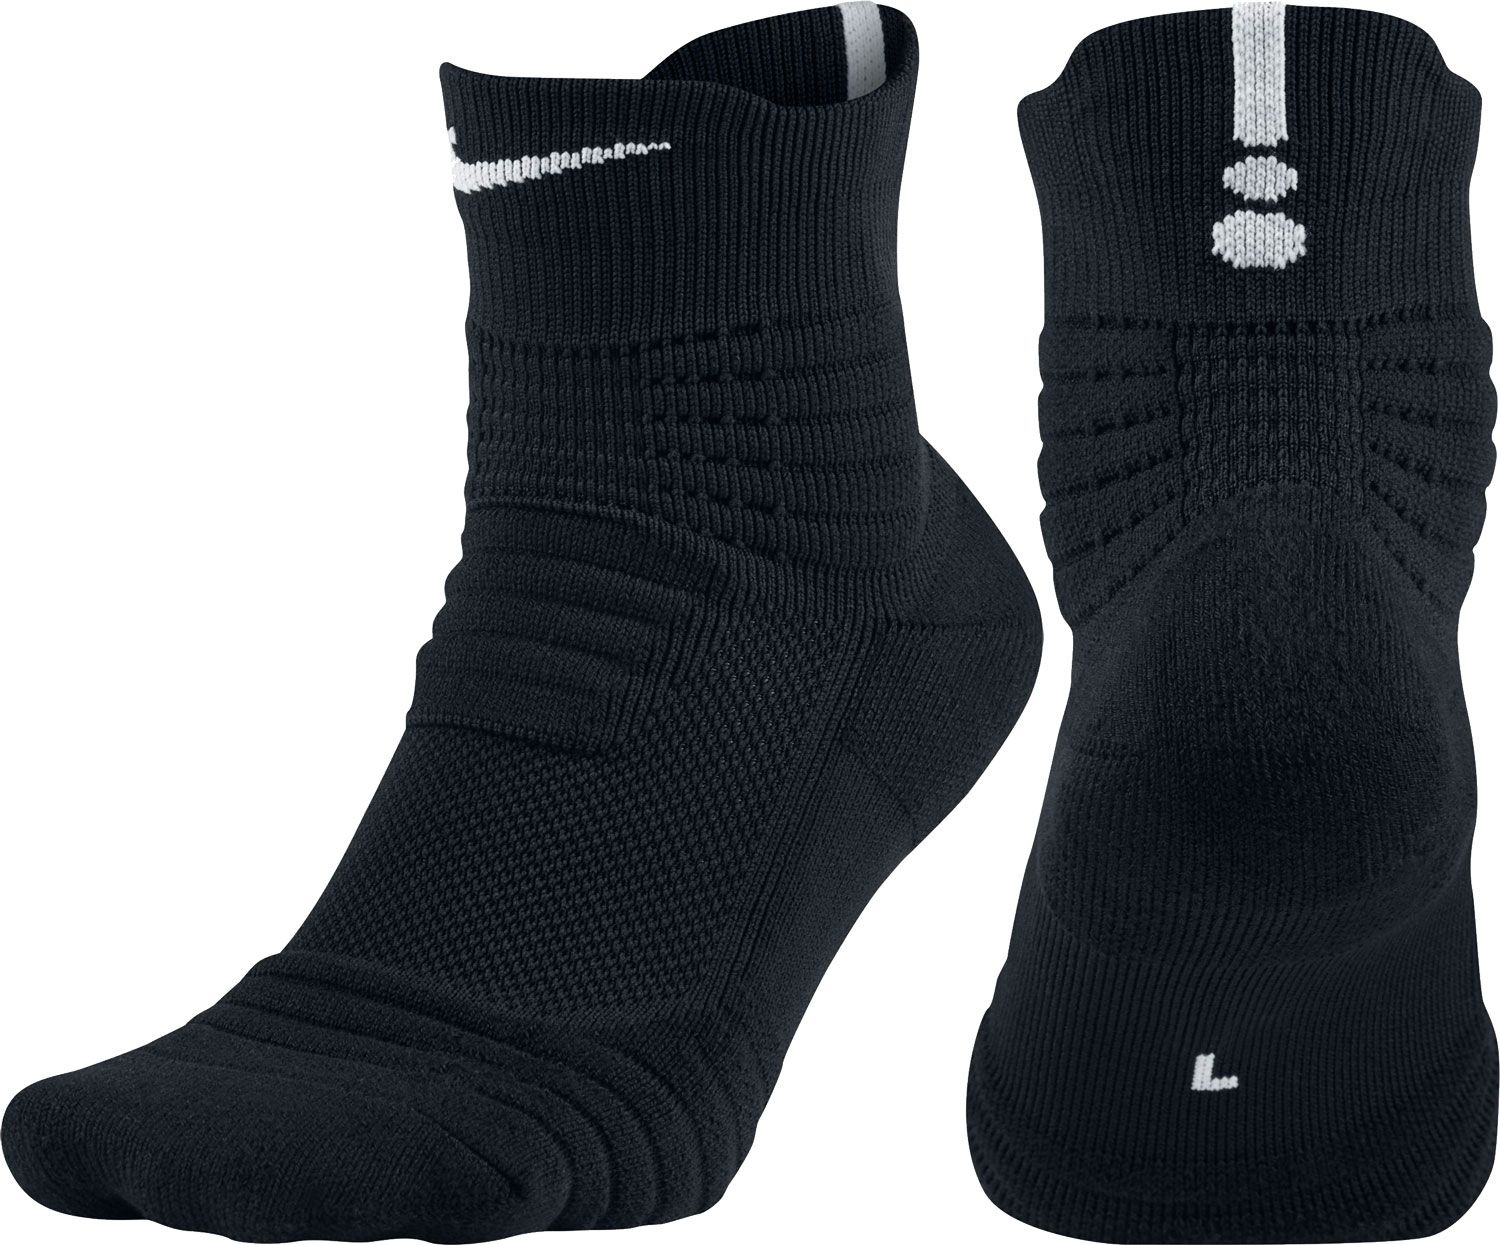 nike elite versatility low basketball socks